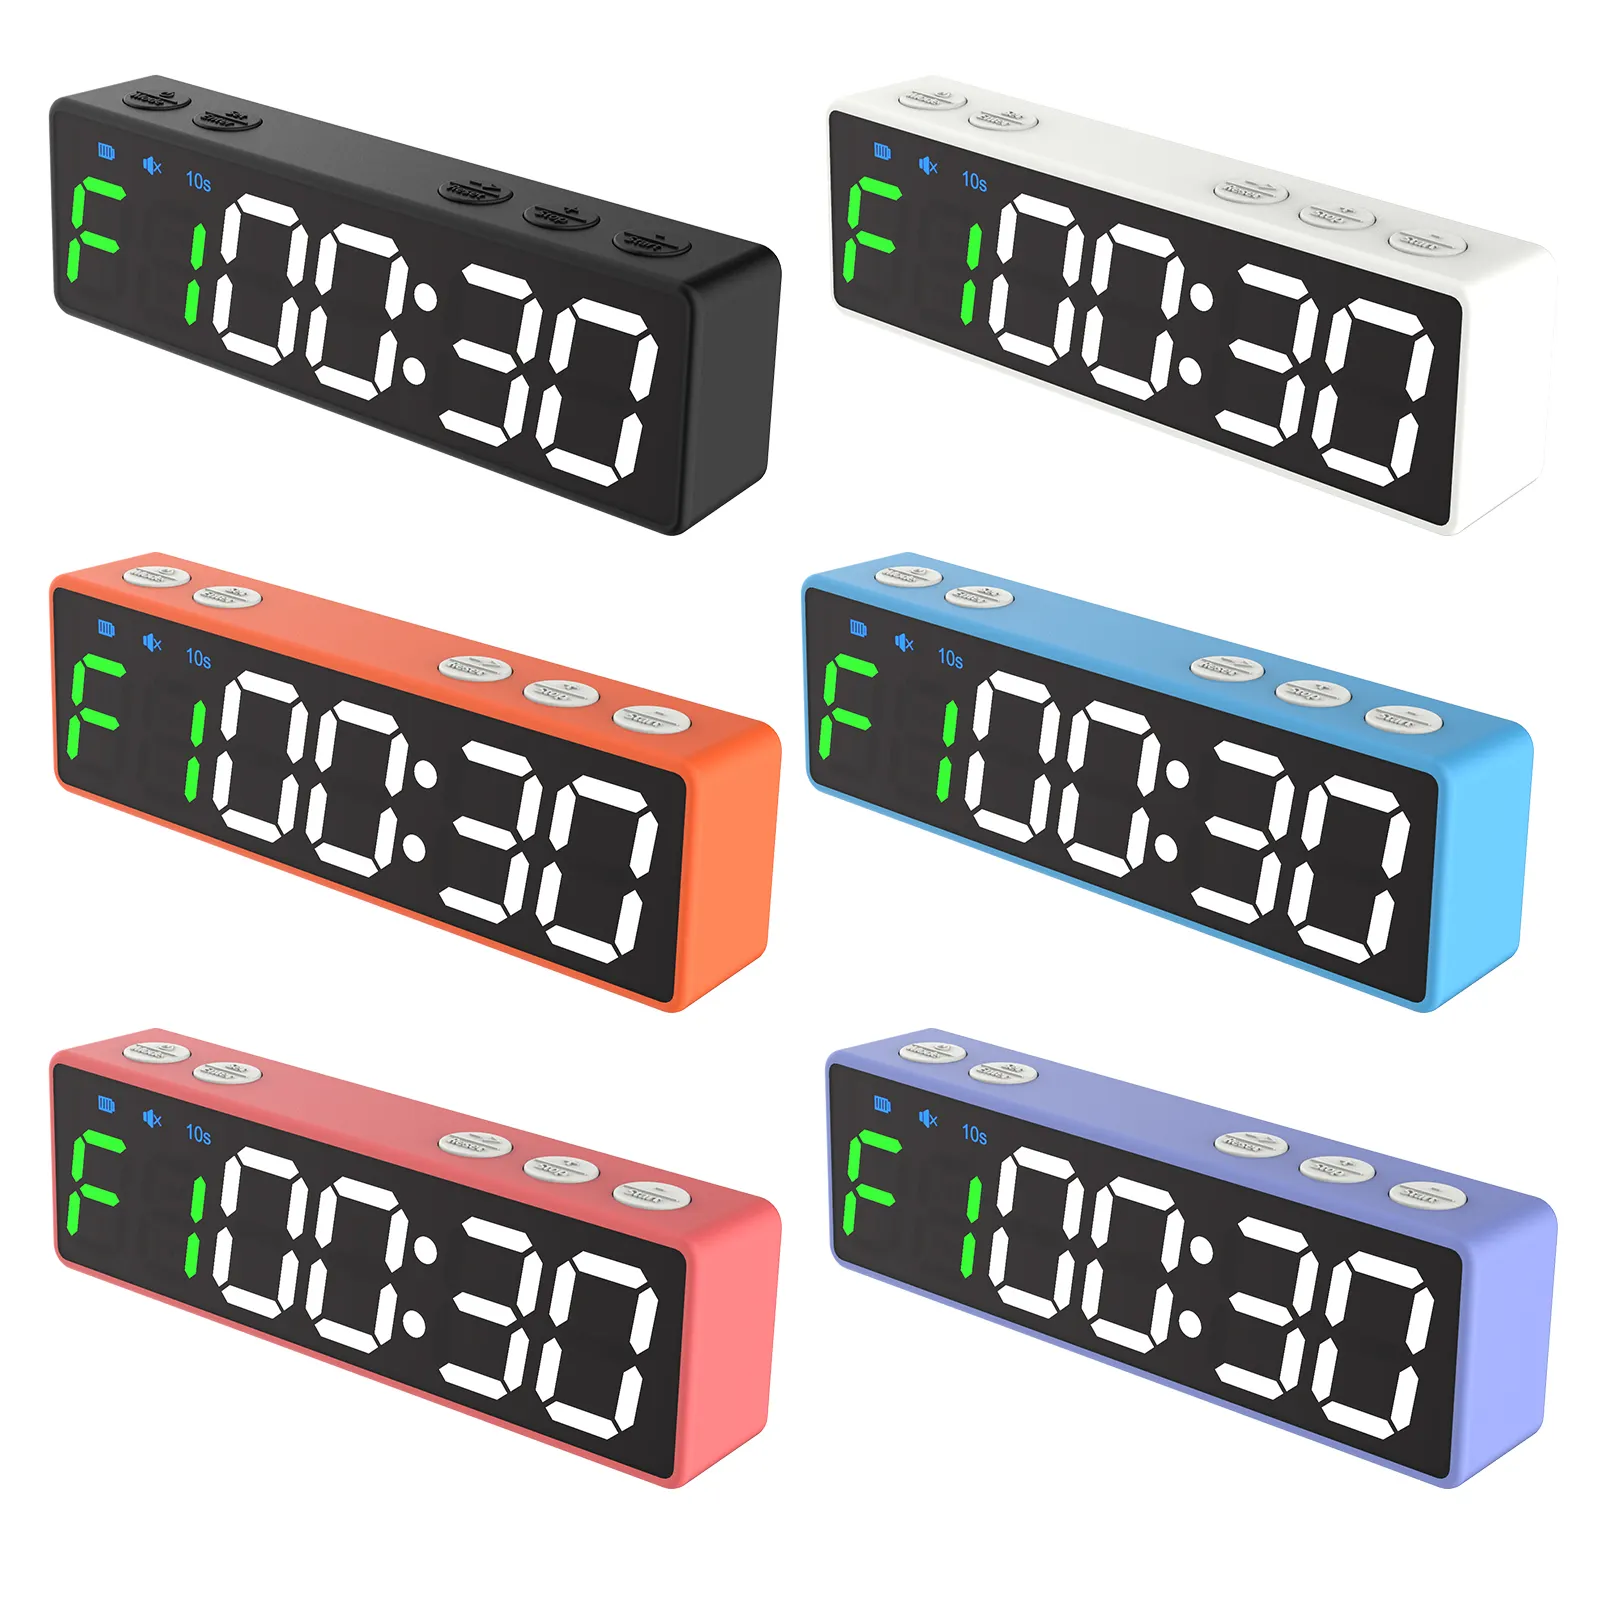 Ganxin Table-reloj Digital con temporizador, cronómetro, alarma, Gps, para laboratorio